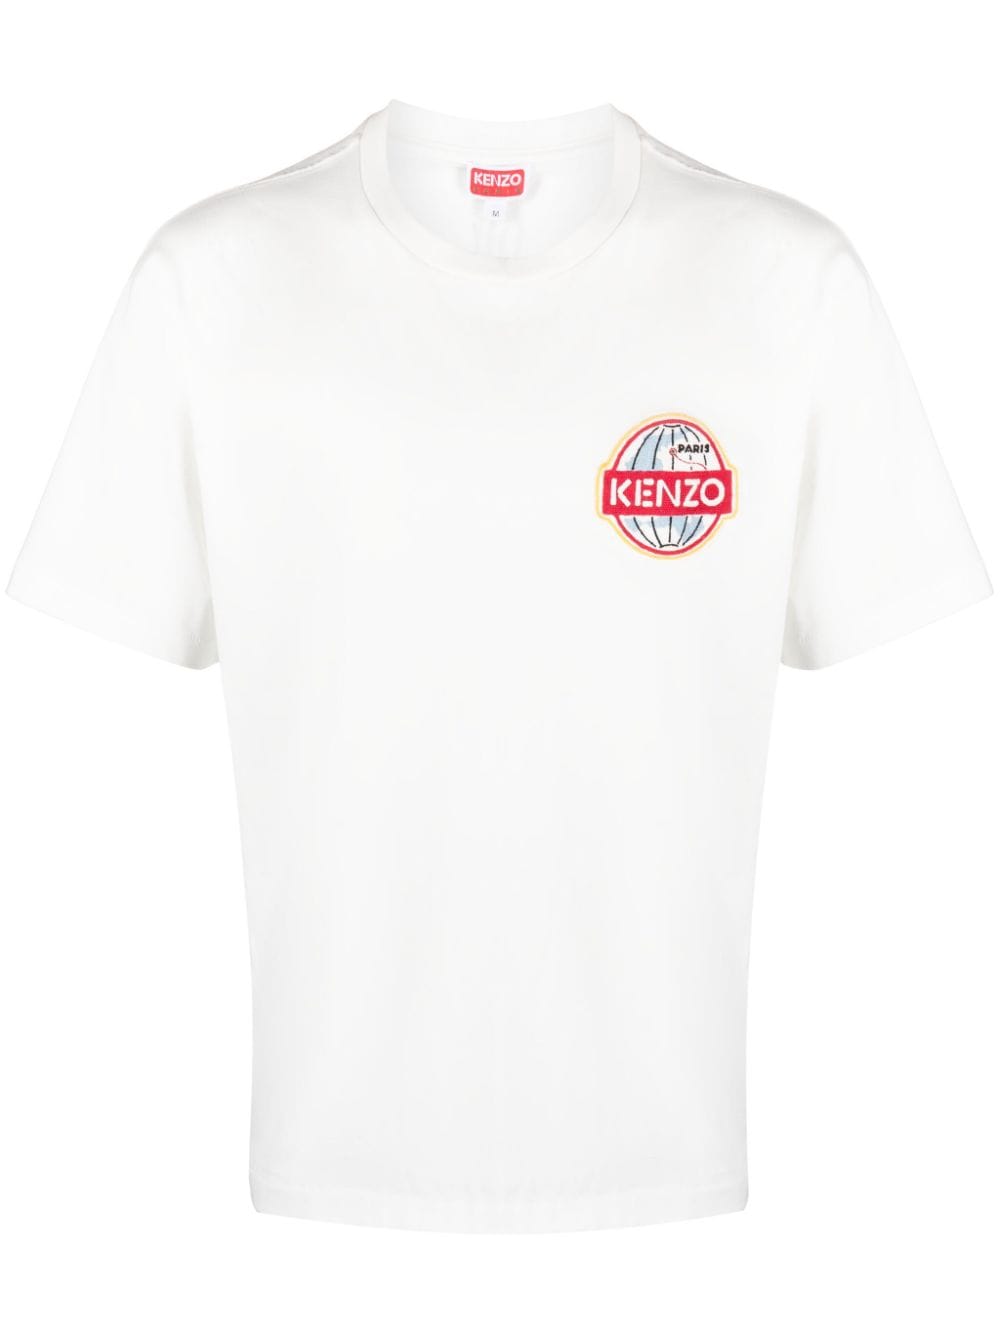 Kenzo KENZO- Kenzo Glove Oversize Cotton T-shirt